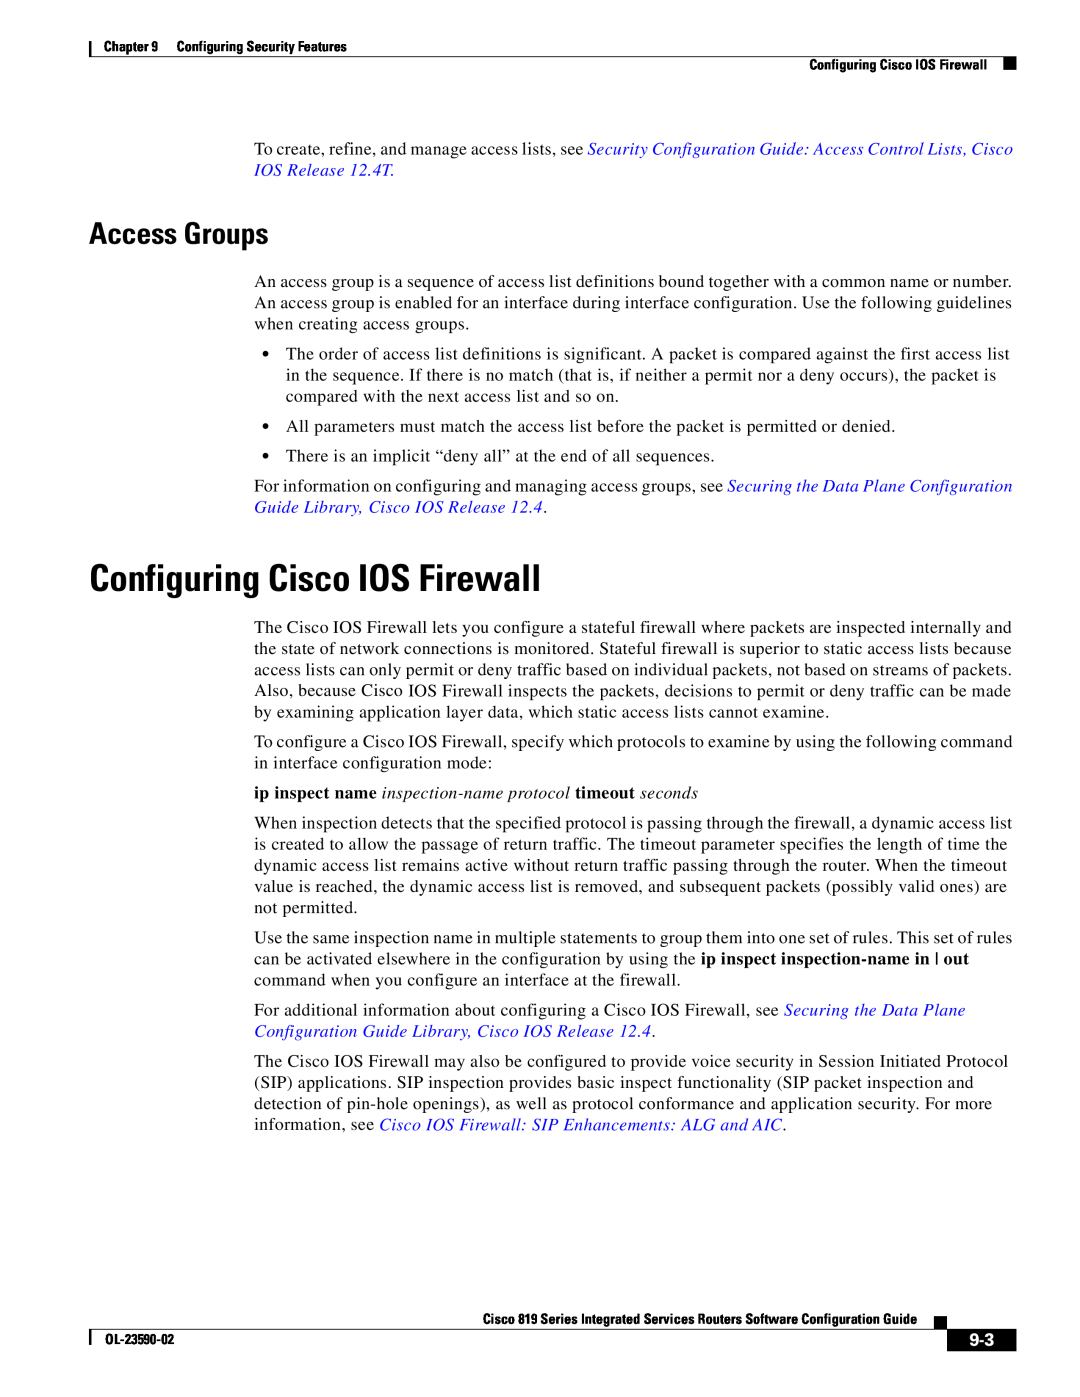 Cisco Systems C819HG4GVK9, C819GUK9 manual Configuring Cisco IOS Firewall, Access Groups 